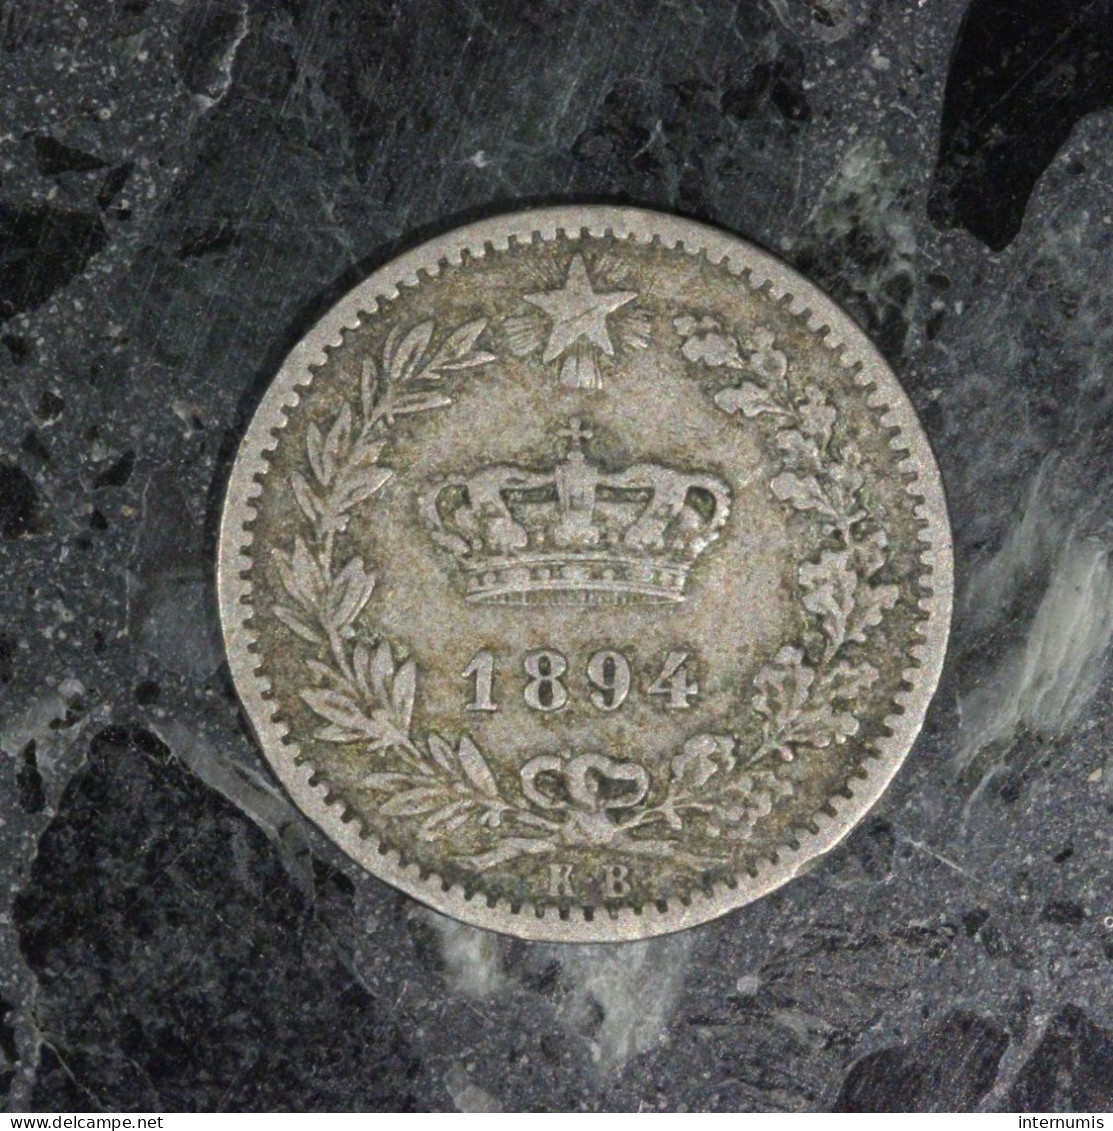  Italie / Italy, Umberto I, 20 Centesimi, 1894, Berlin, Cu-N (Copper-Nickel), TTB (EF),
KM#28.1 - 1878-1900 : Umberto I